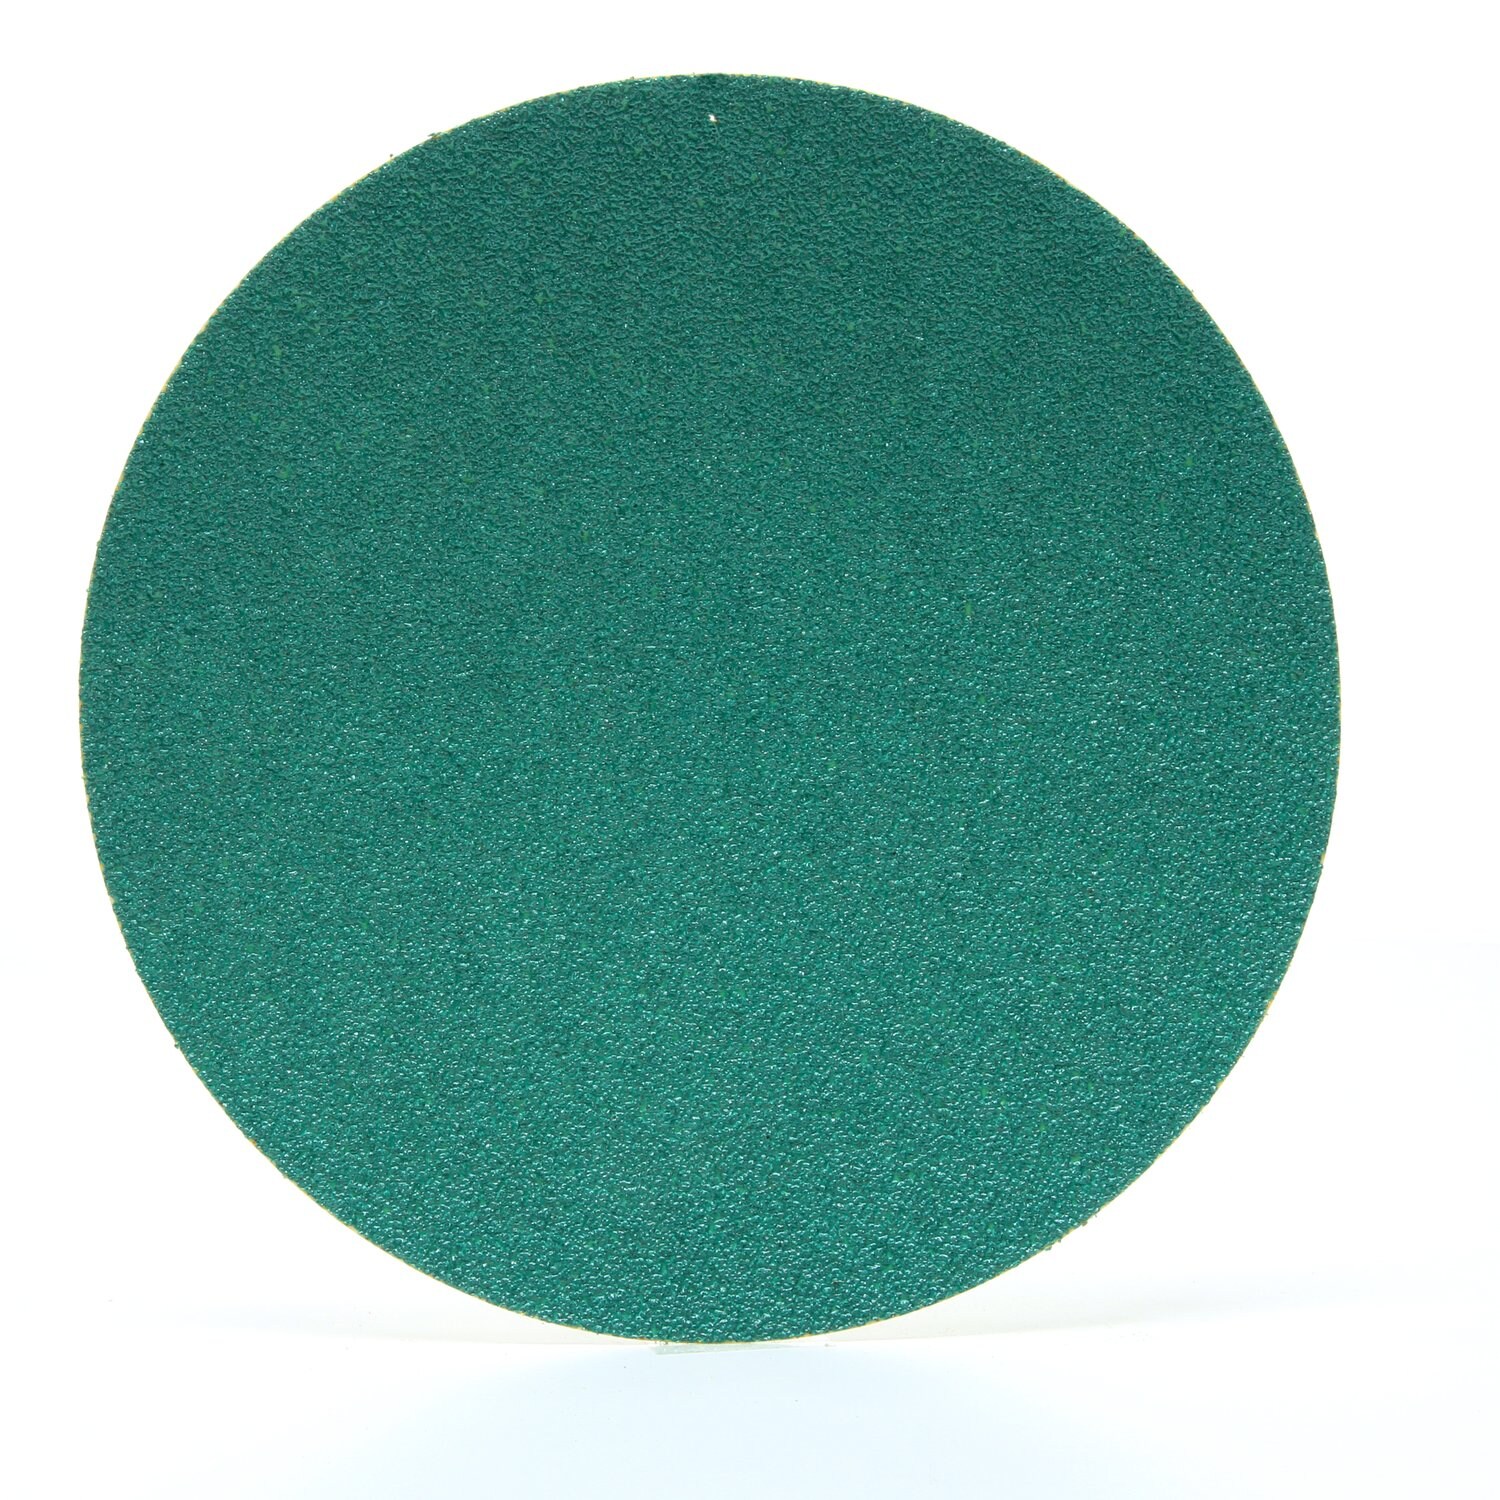 7100192891 - 3M Green Corps Hookit Paper Abrasive Disc, 35434, 60 Grit, E weight,
7 in x 3/8 in, 50 discs per carton, 5 cartons per case